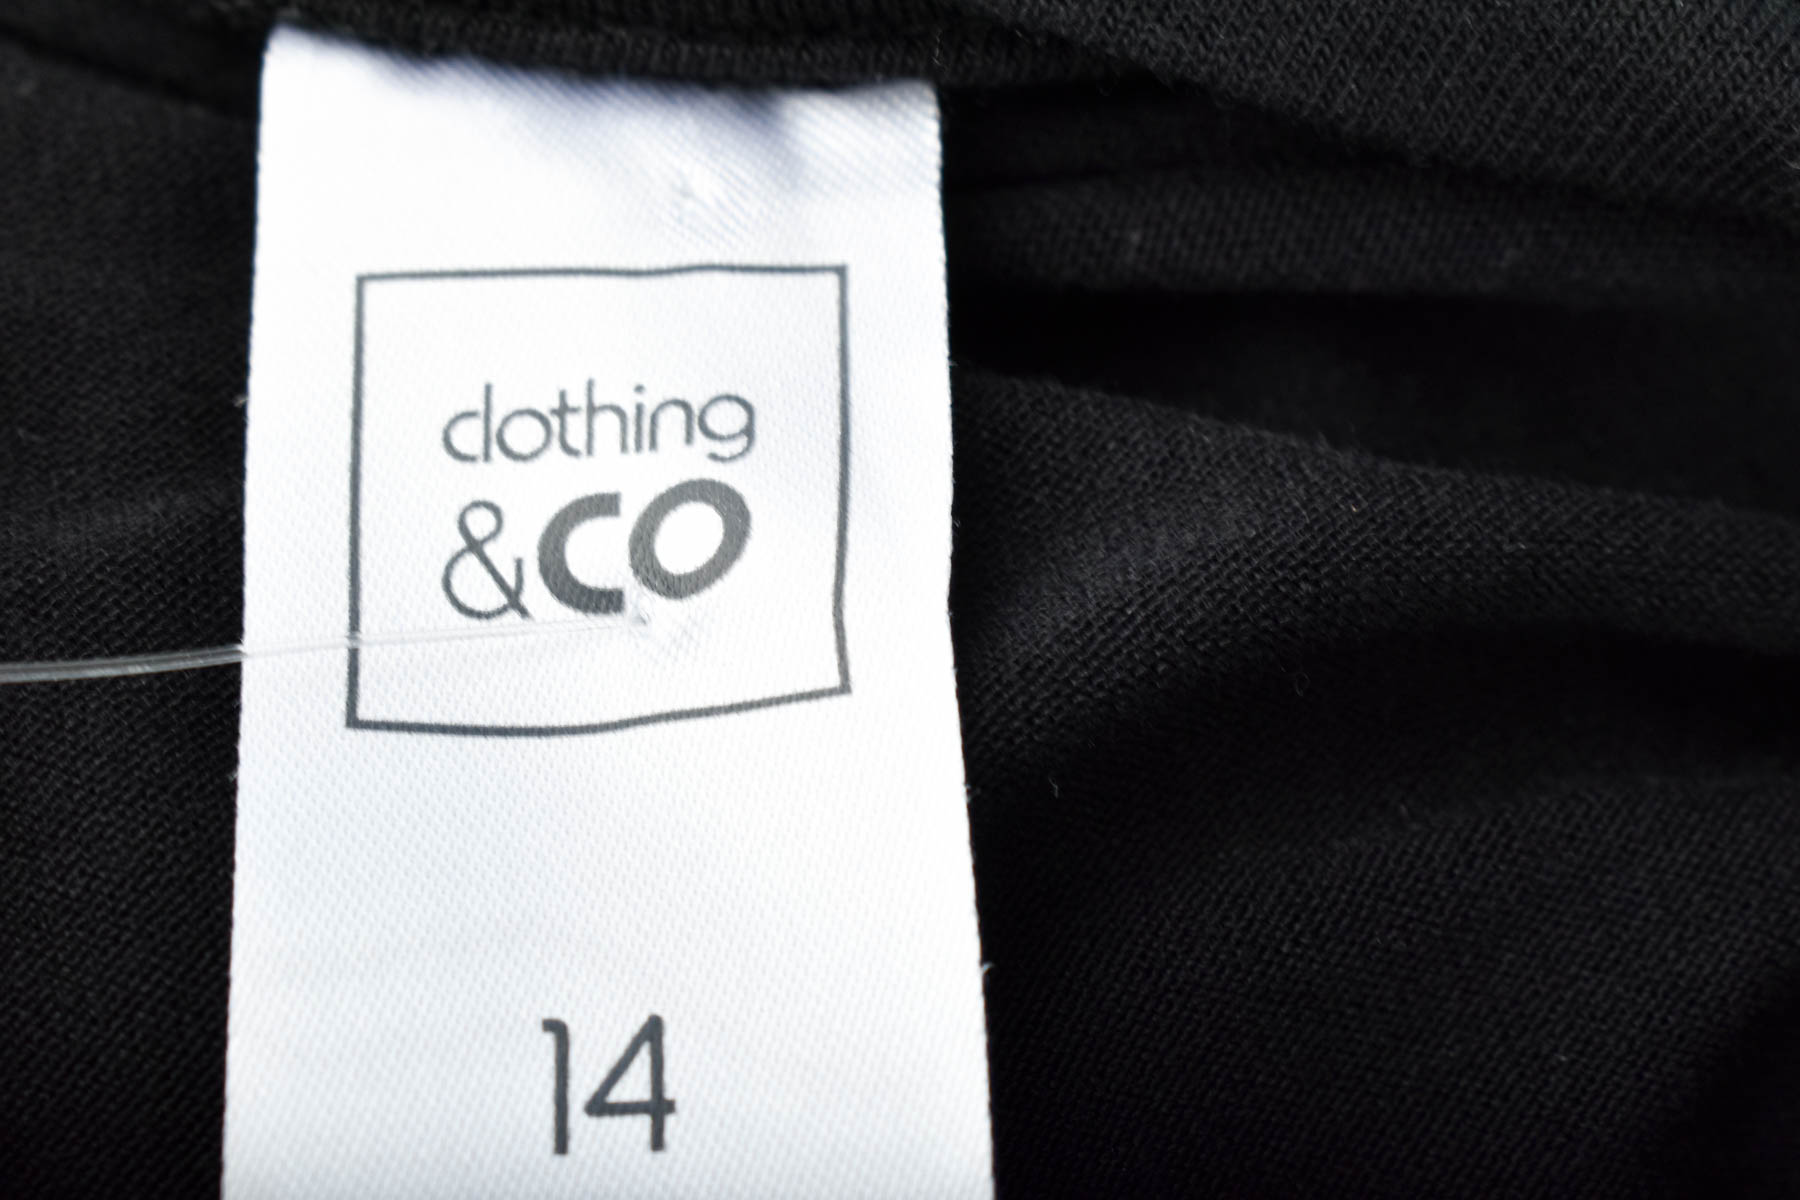 Tricou de damă - Clothing & CO - 2